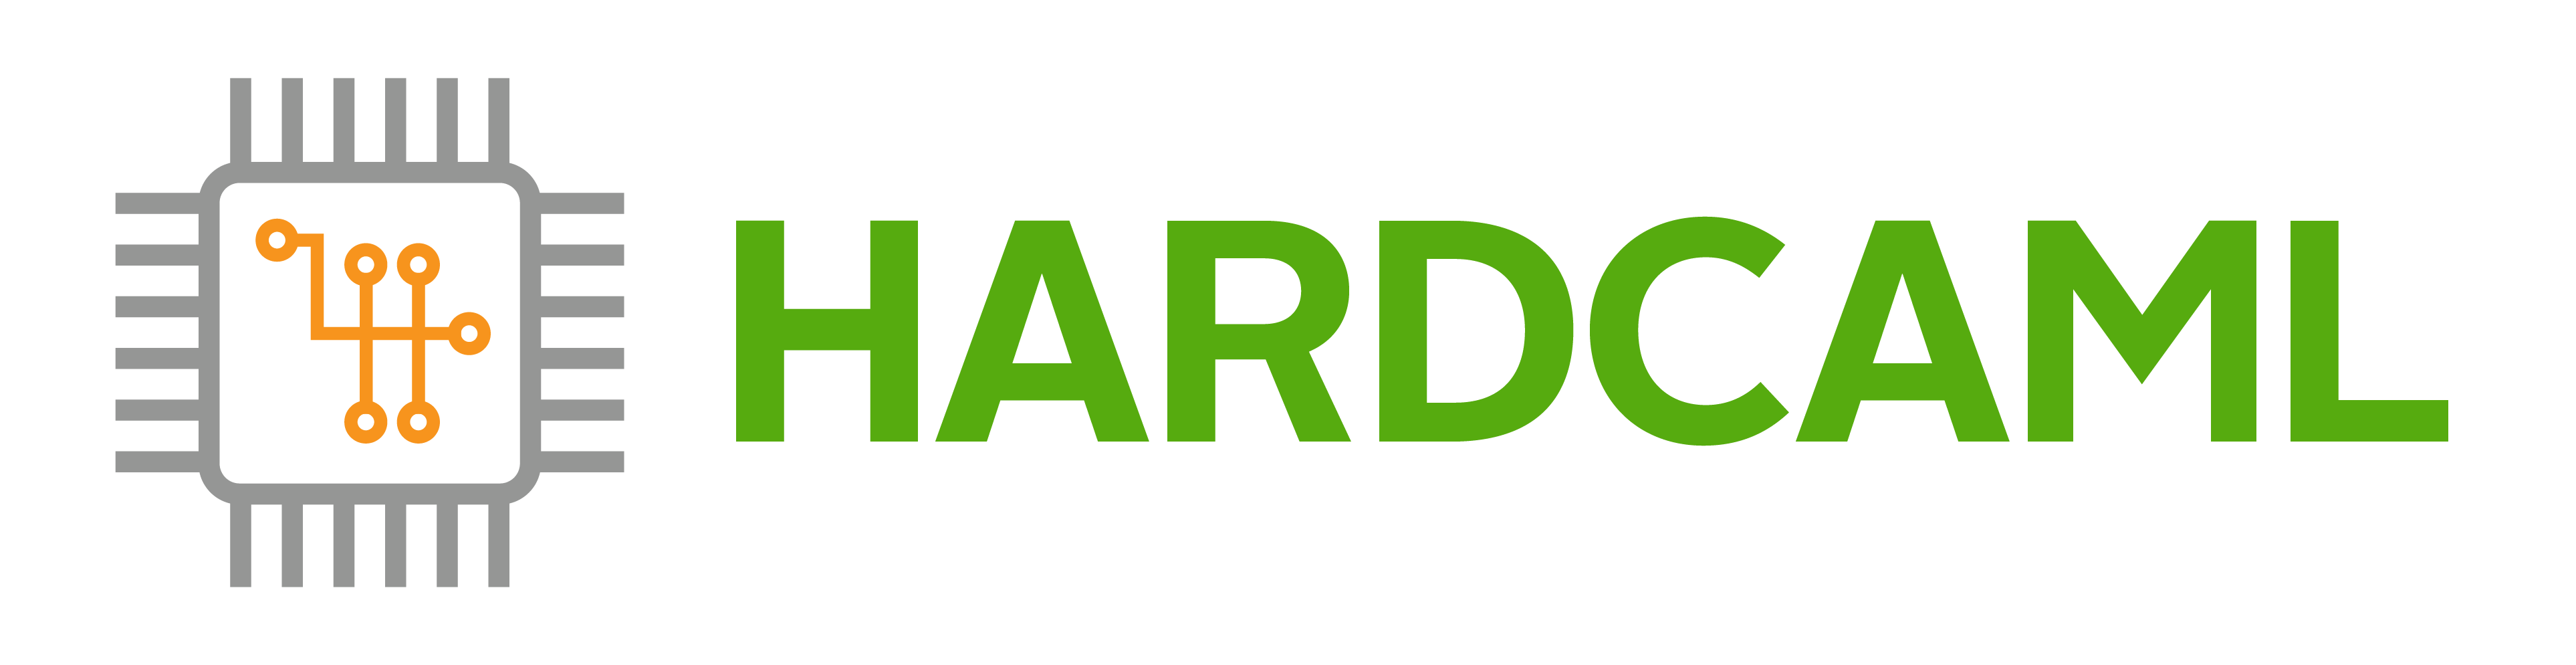 hardcaml logo